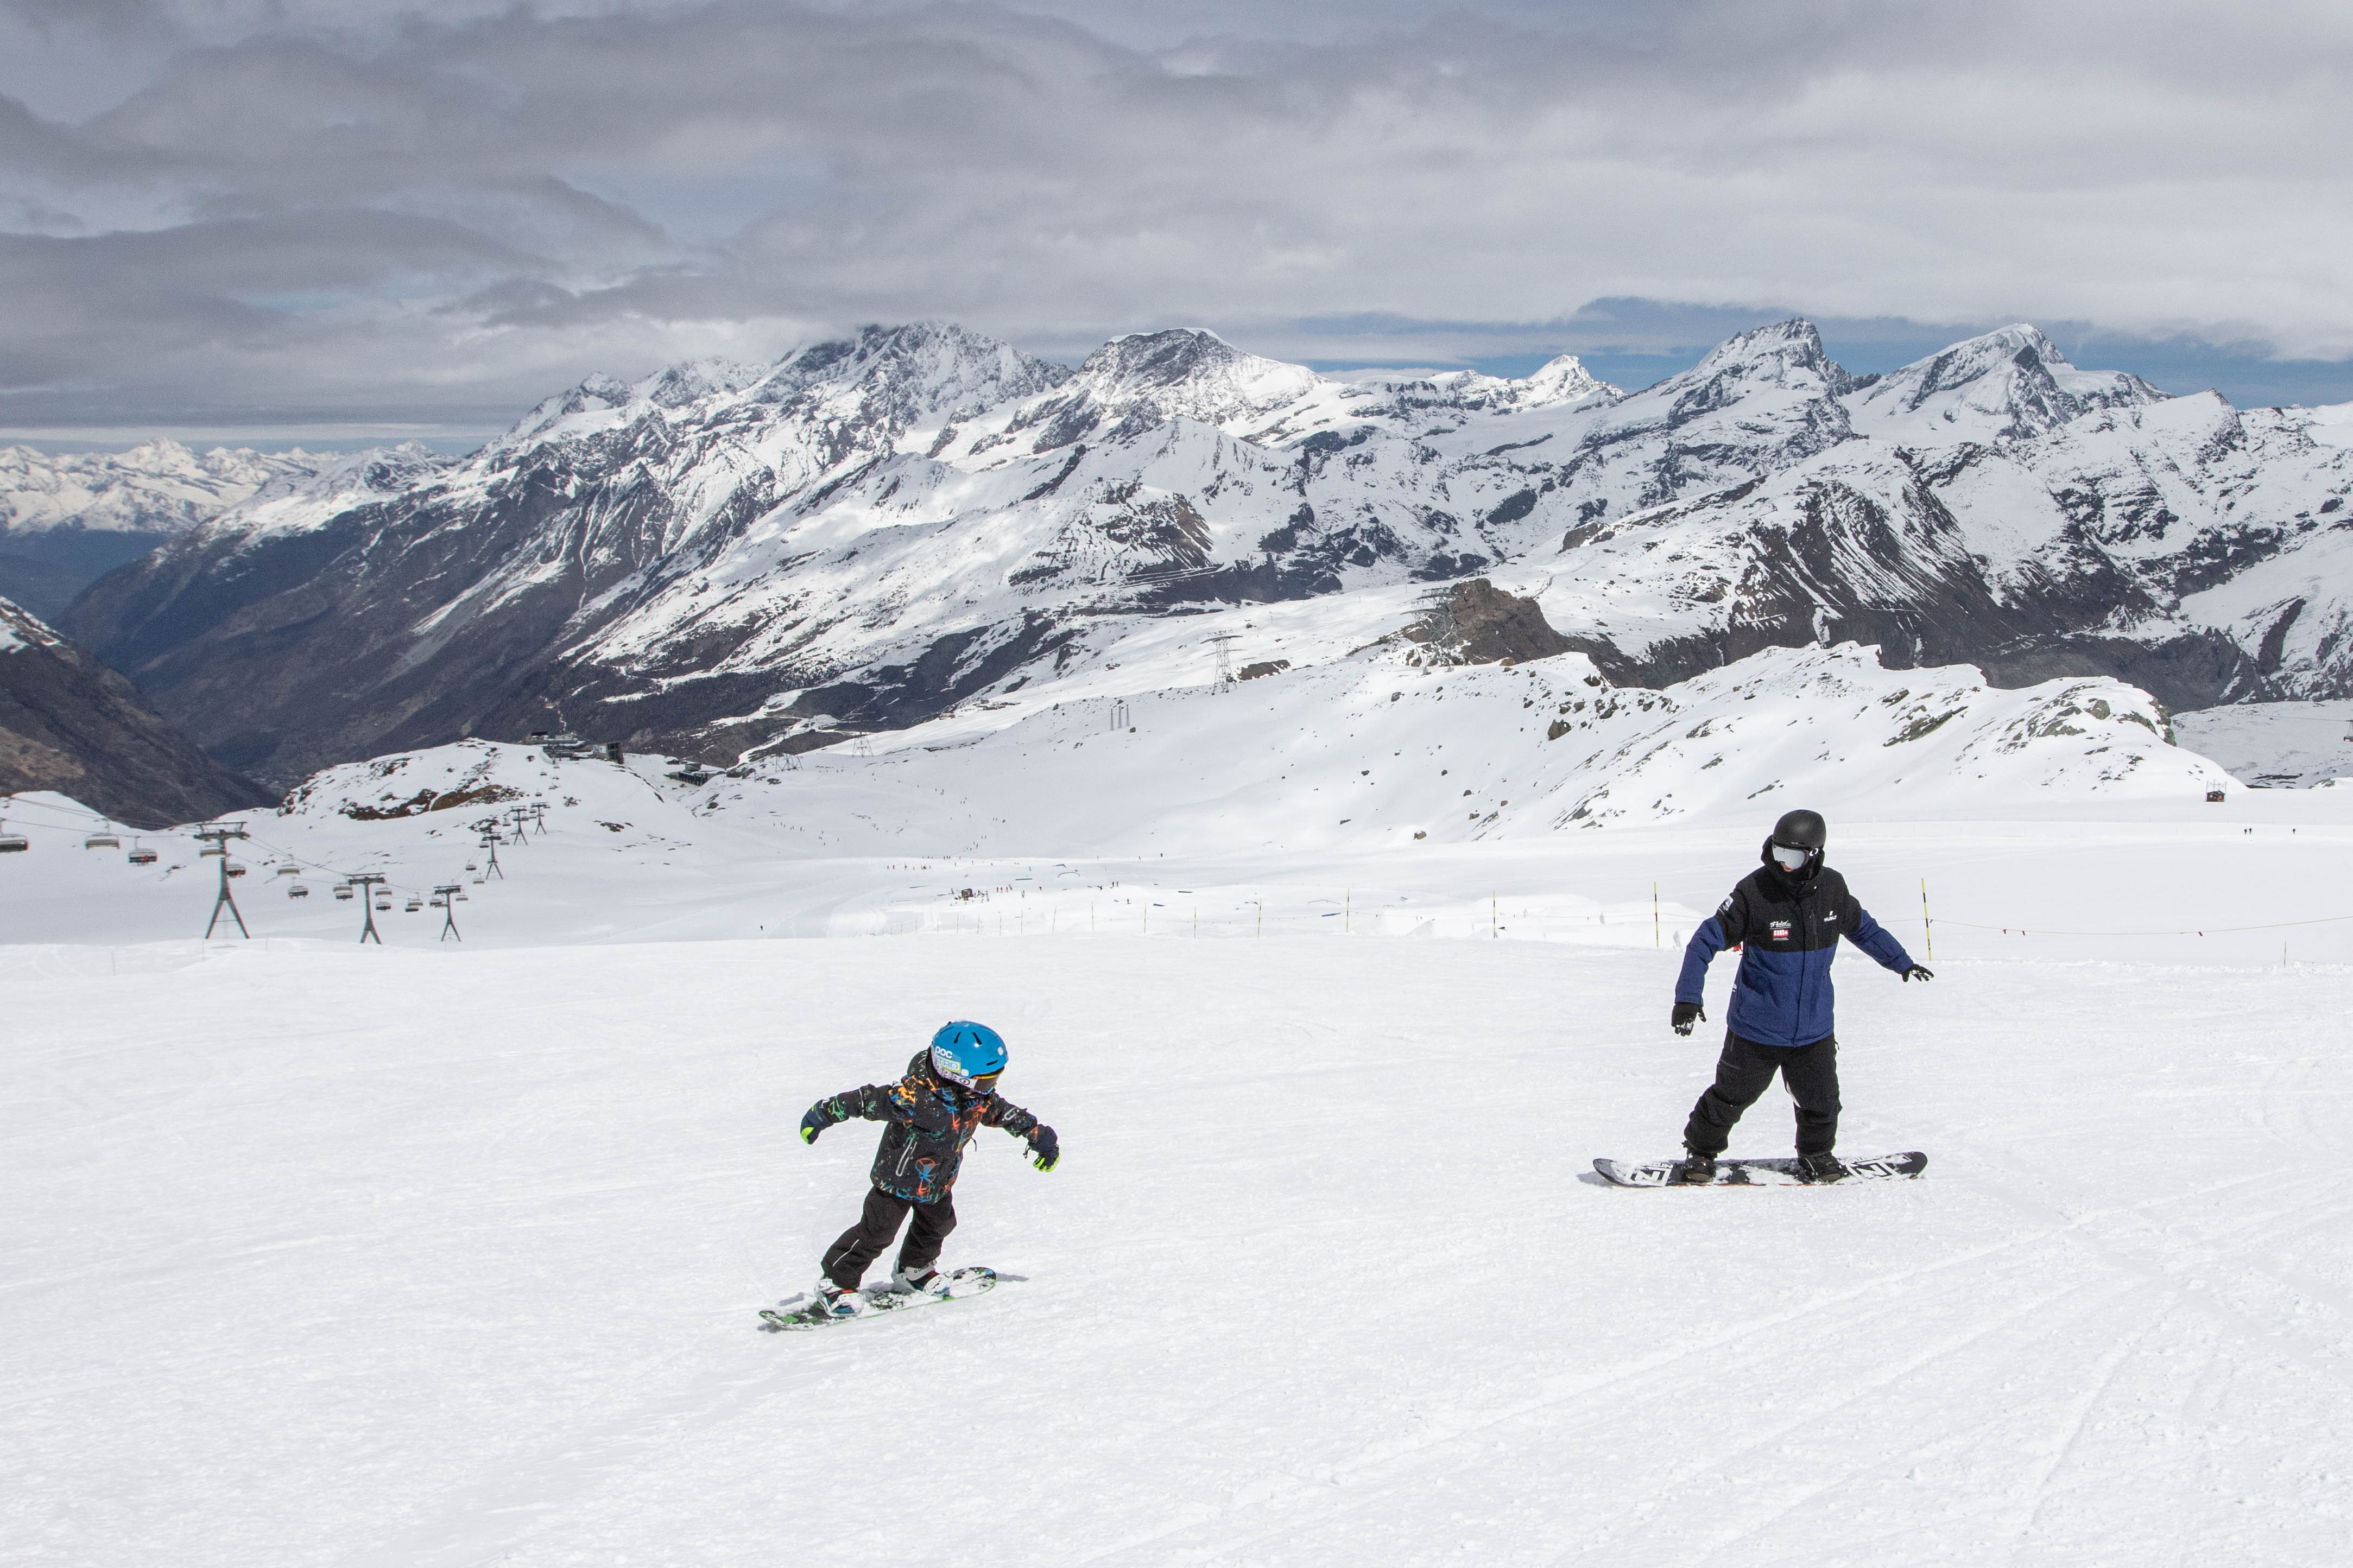 snowboard beginner lessons for adults, Stoked, Zermatt